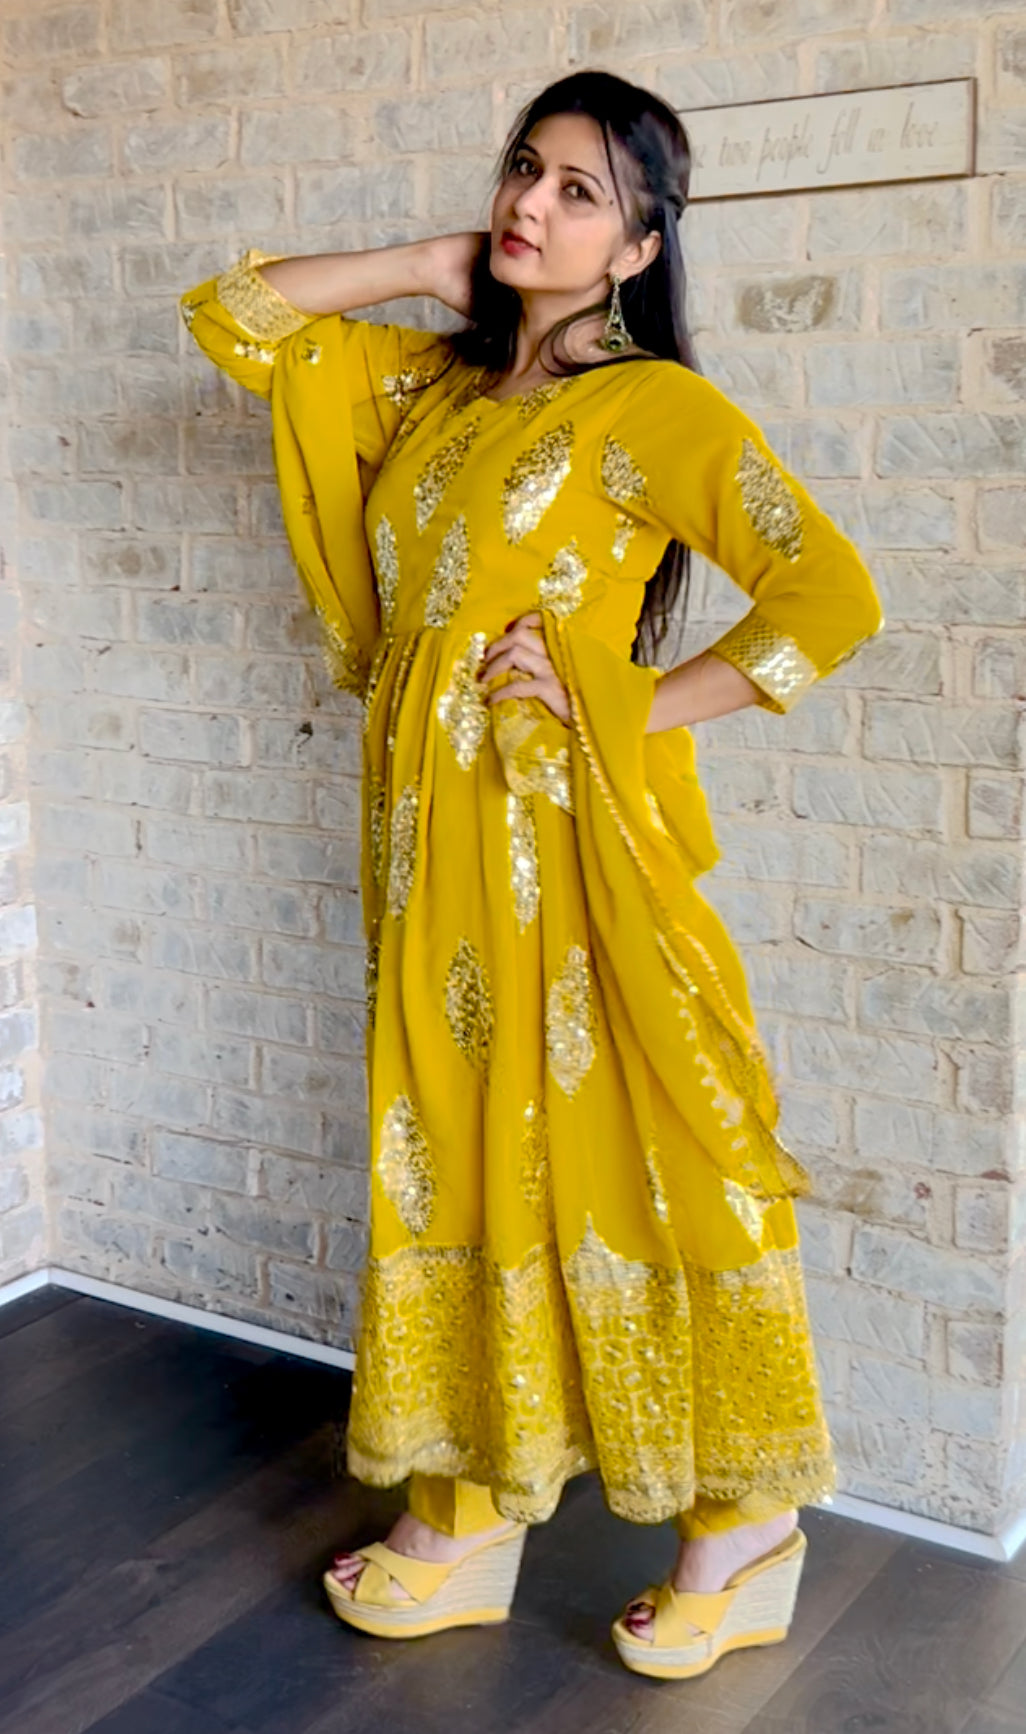 New Latest casual wear salwar kurti designs 2020 | Patiala kurti design | Salwar  suits 2020 designs - YouTube